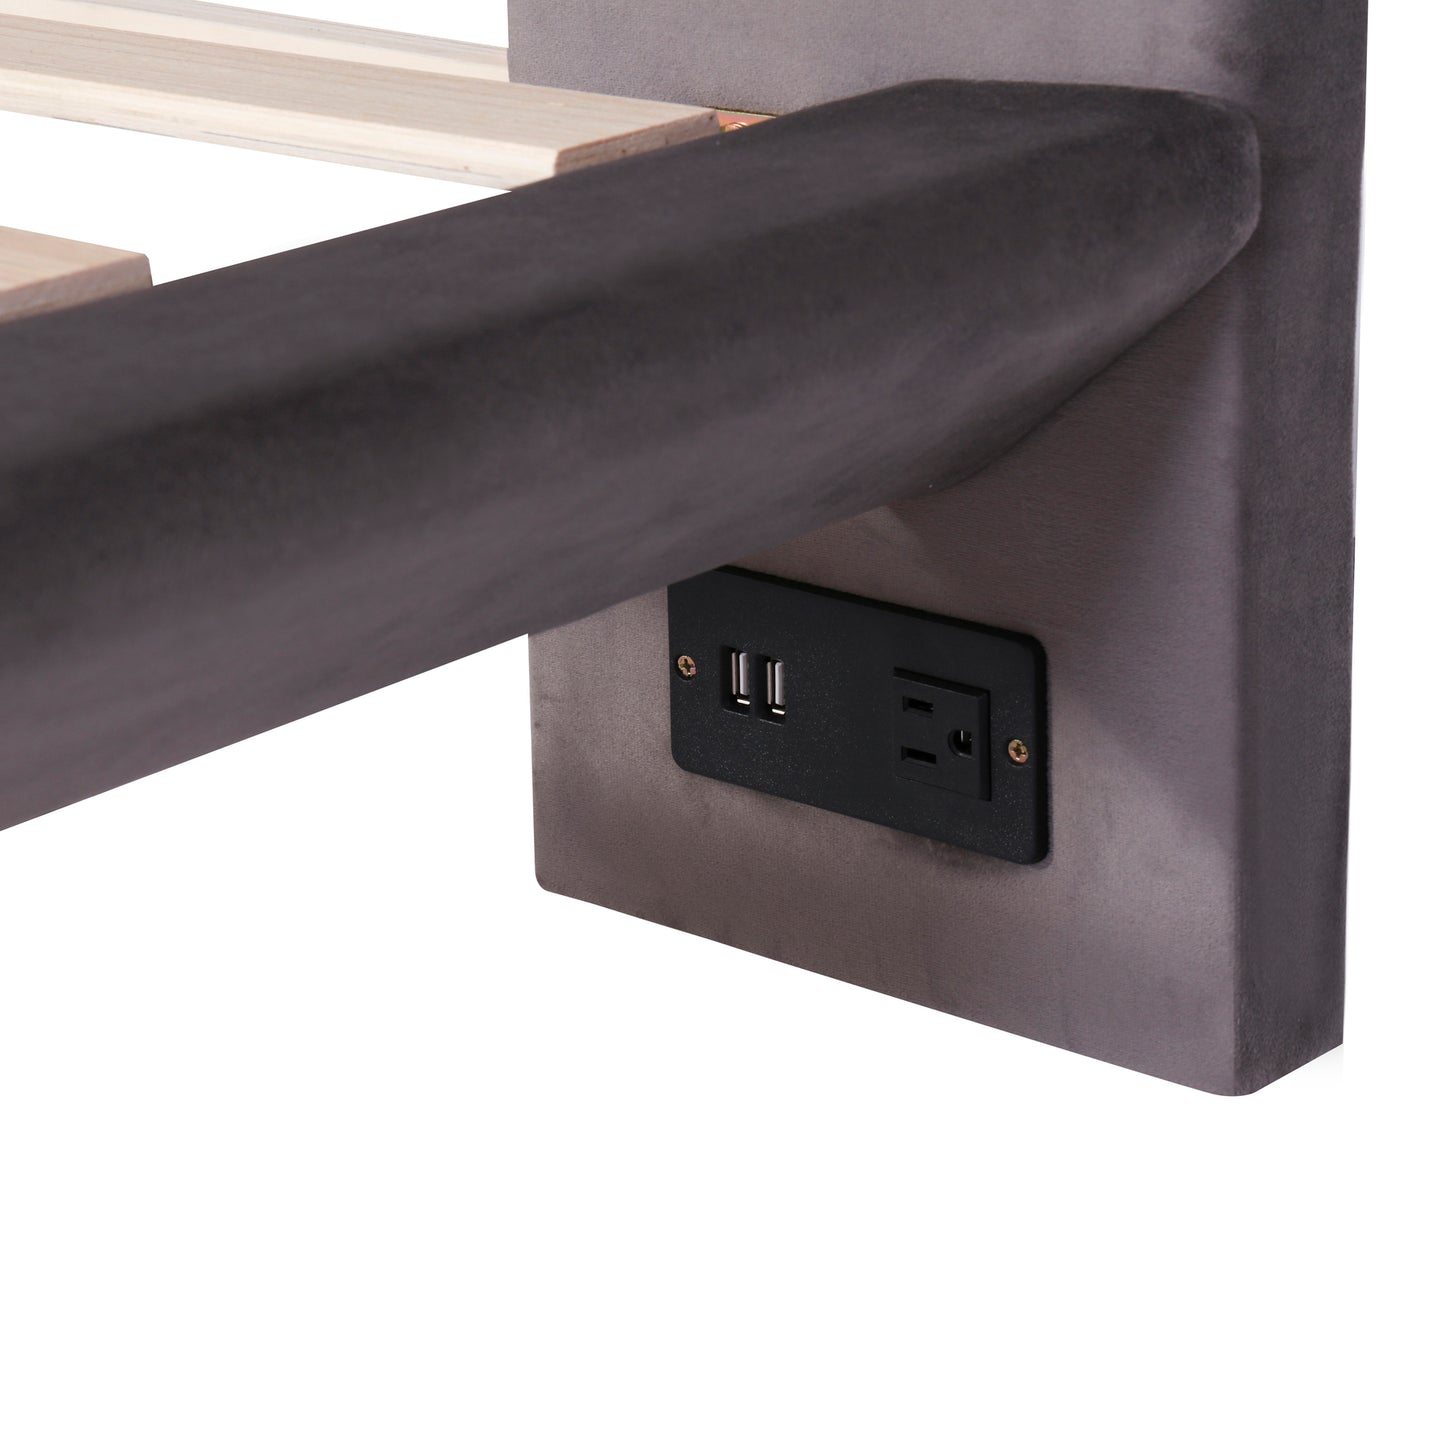 Queen Size Upholstered Platform Bed with Sensor Light and 2 Large Backrests, Stylish Platform Bed with 2 sets of USB Port and Socket on each rear Bed Leg, Gray